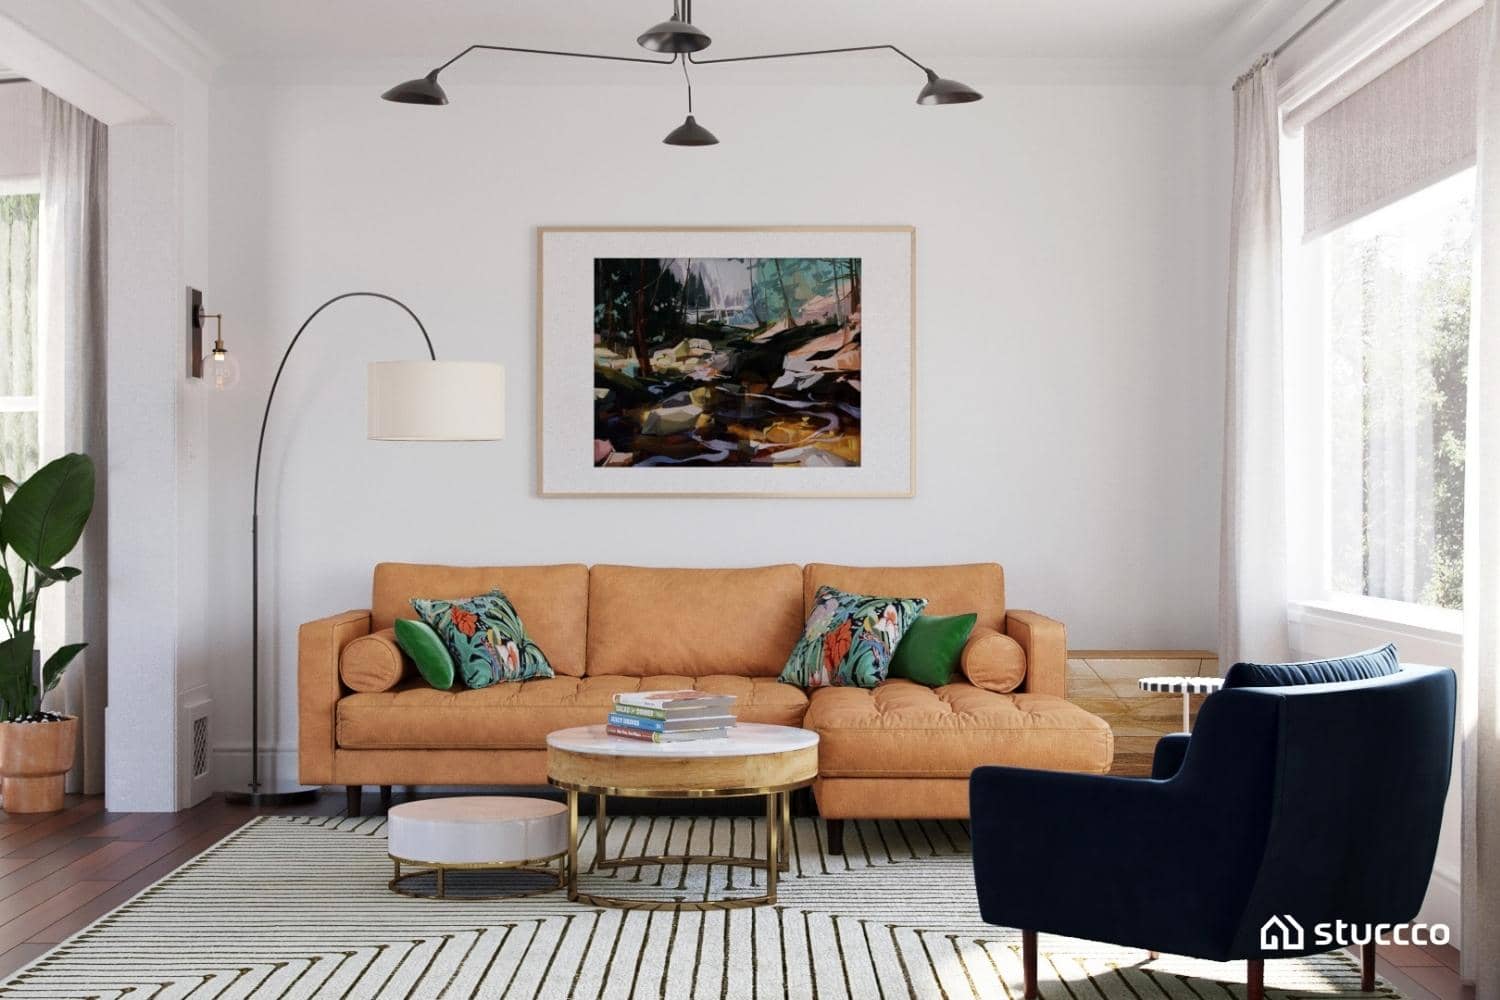 Stucccco online interior design living room, patterns, beautiful artwork